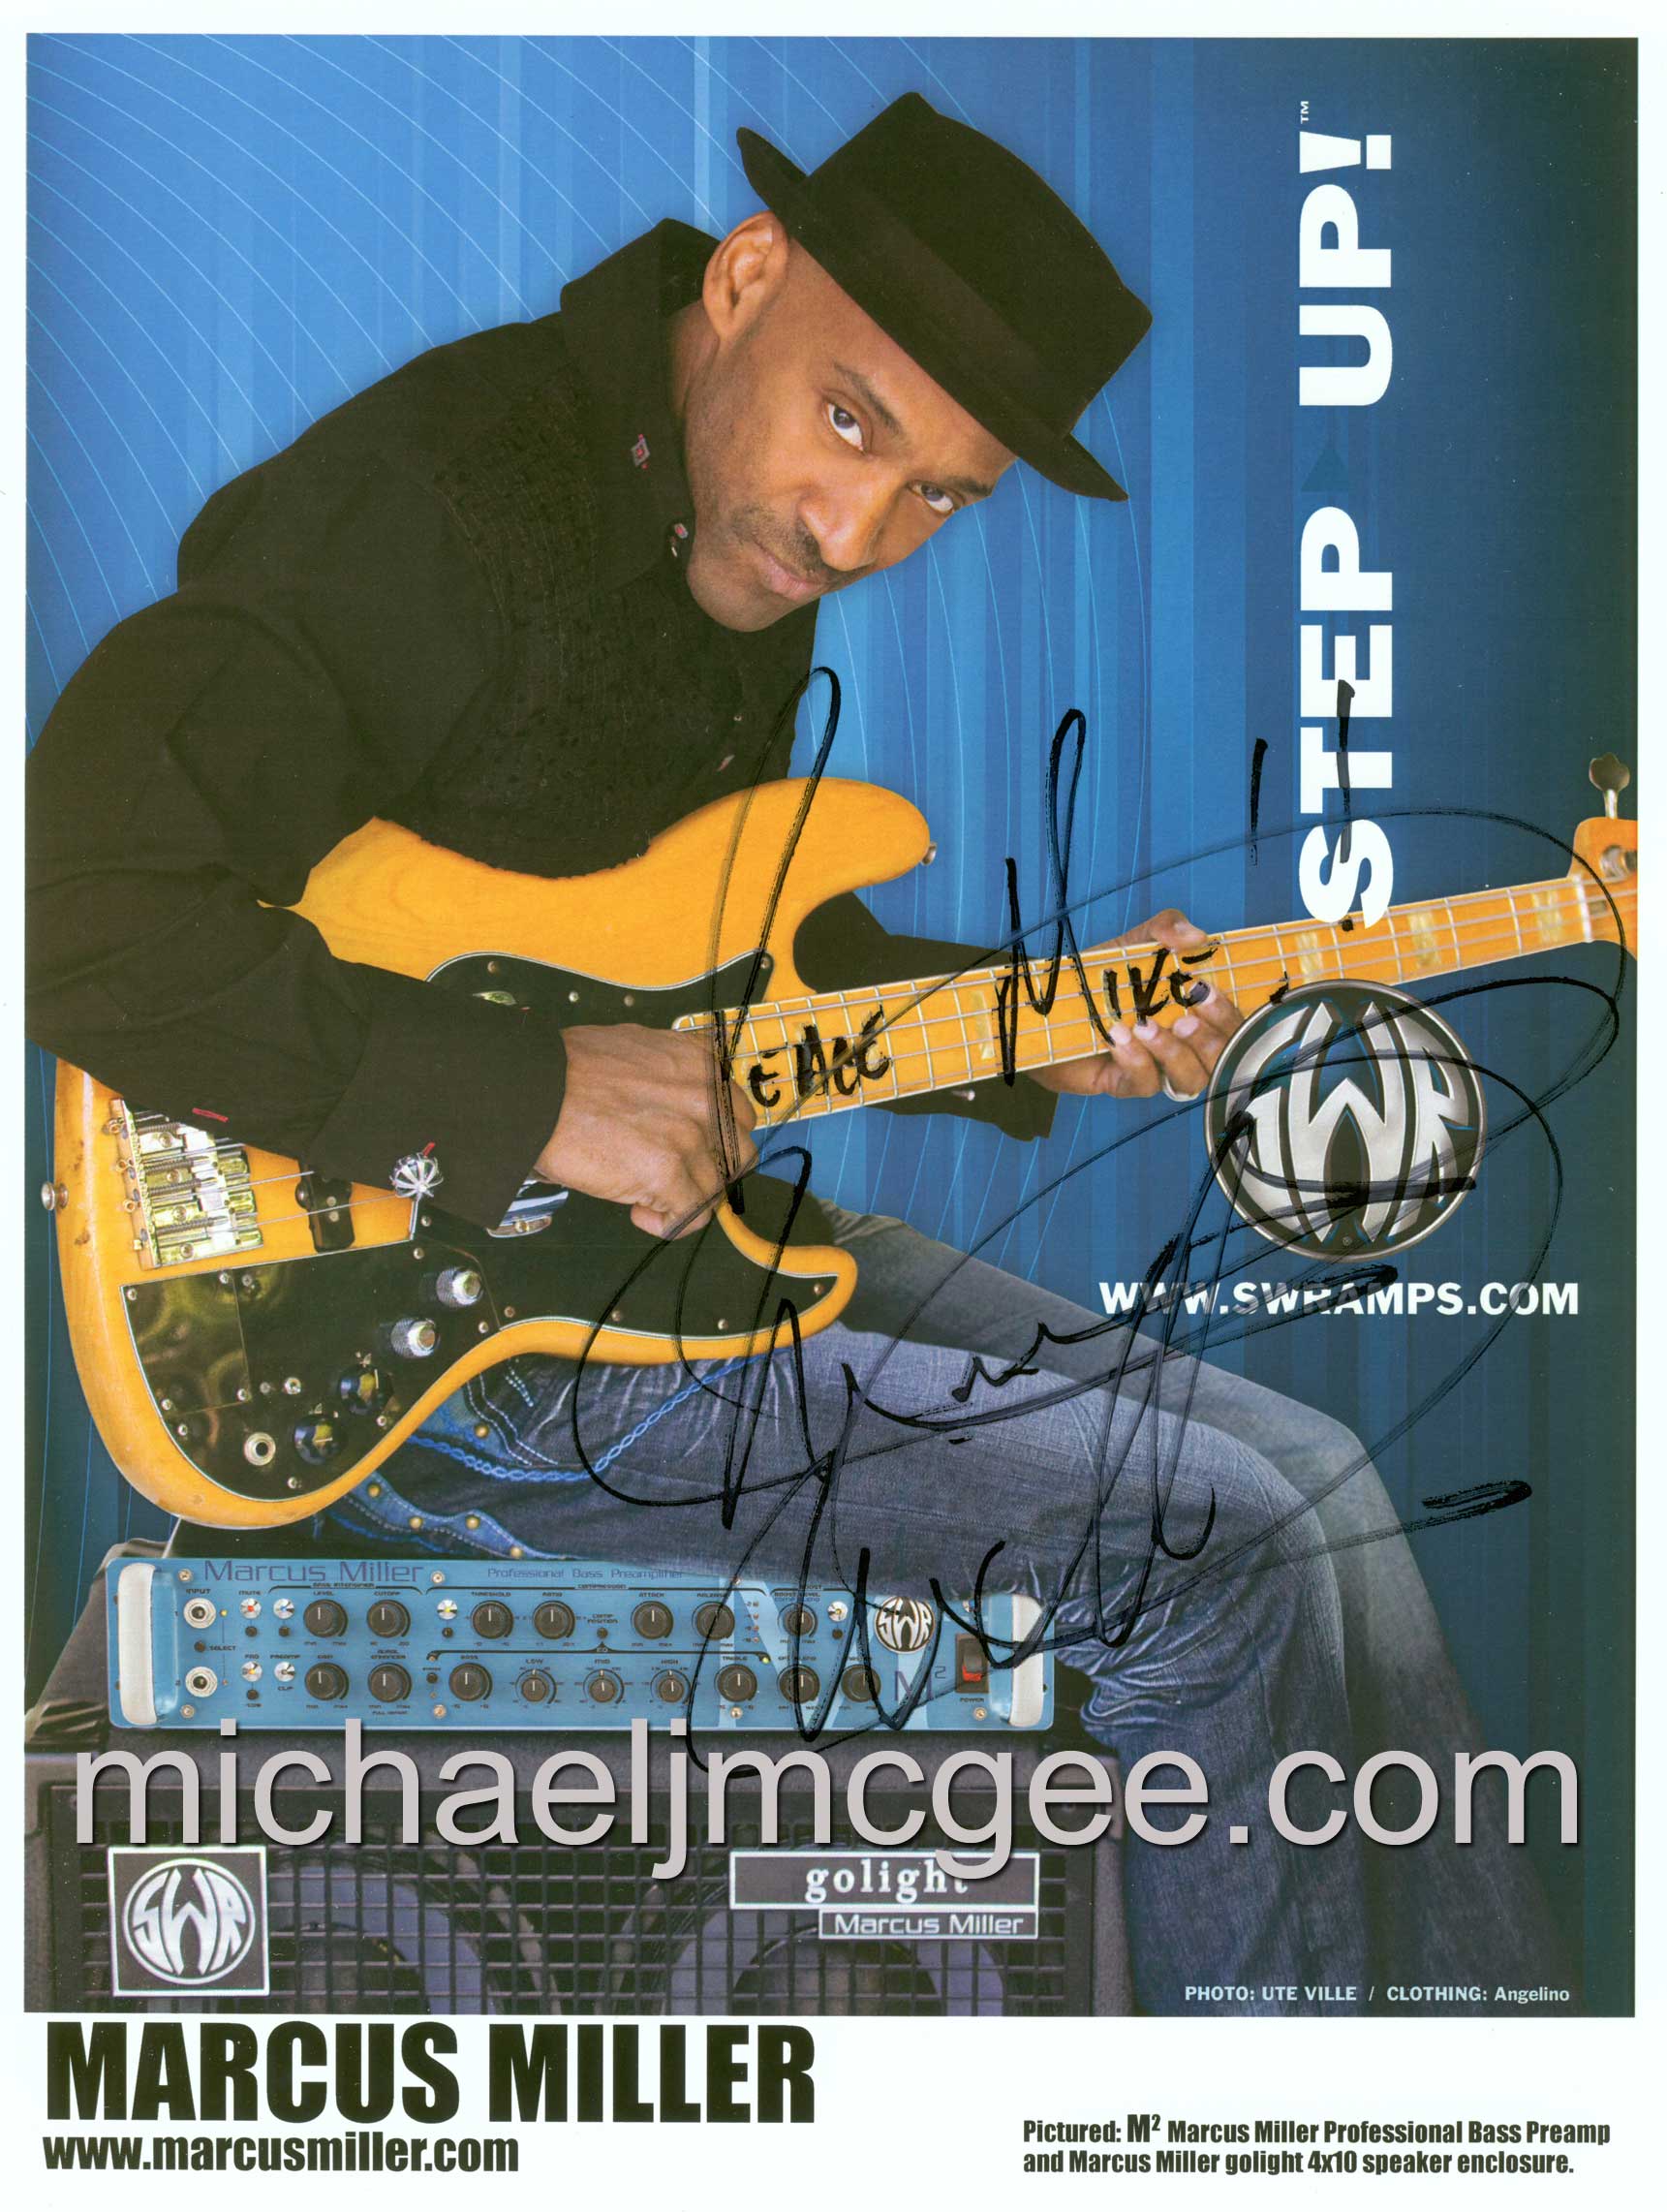 Marcus Miller / michaeljmcgee.com